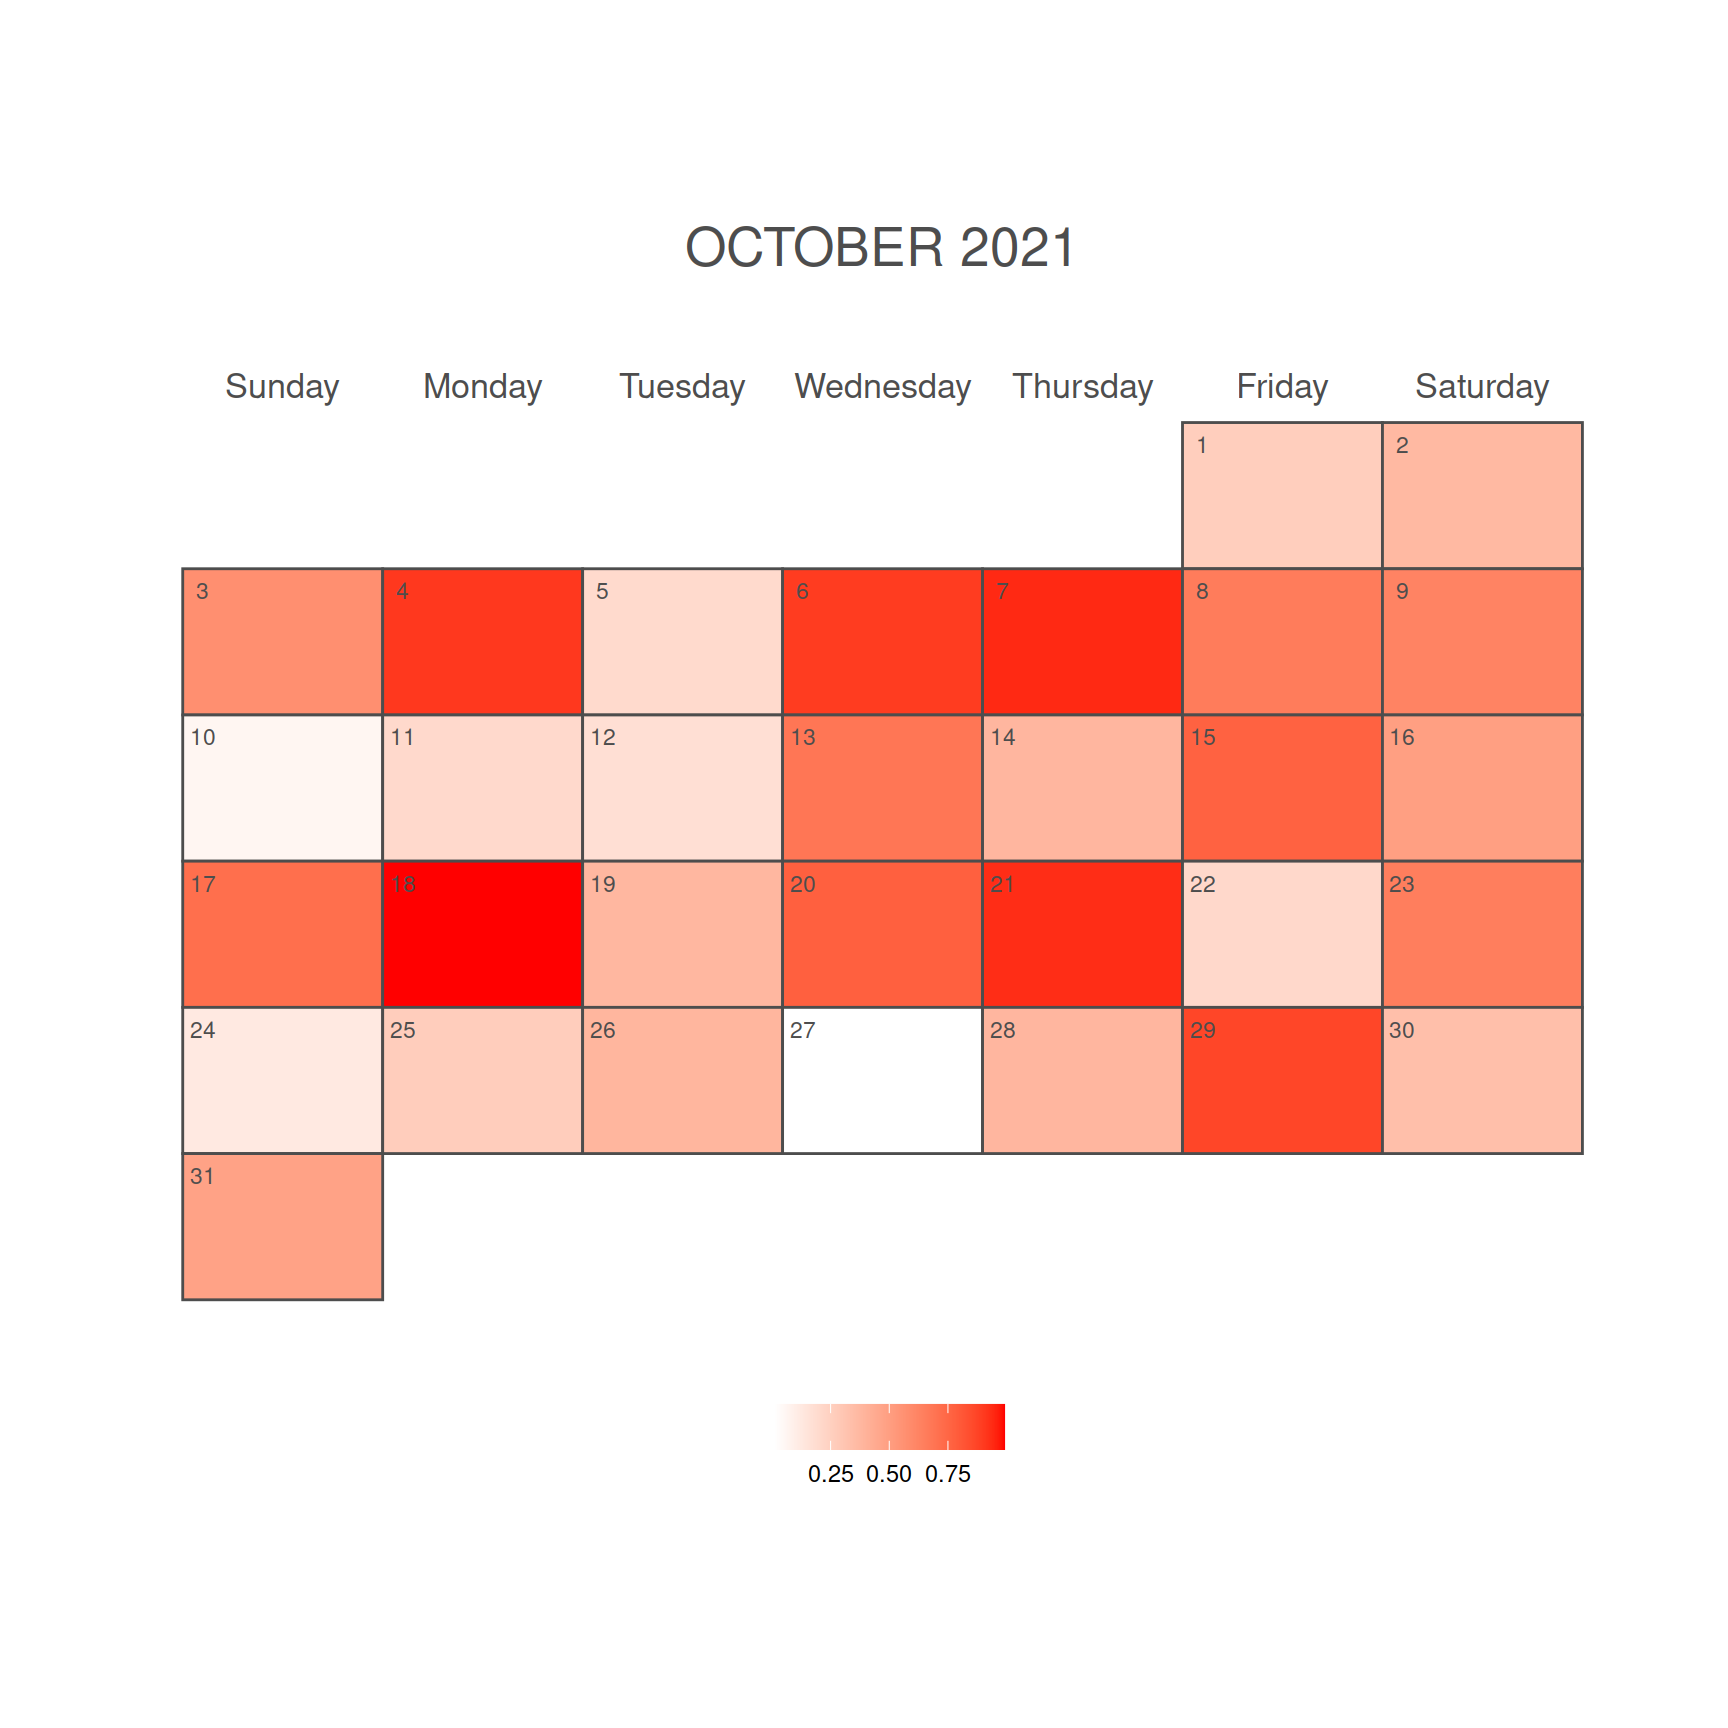 Monthly calendar heat map in R